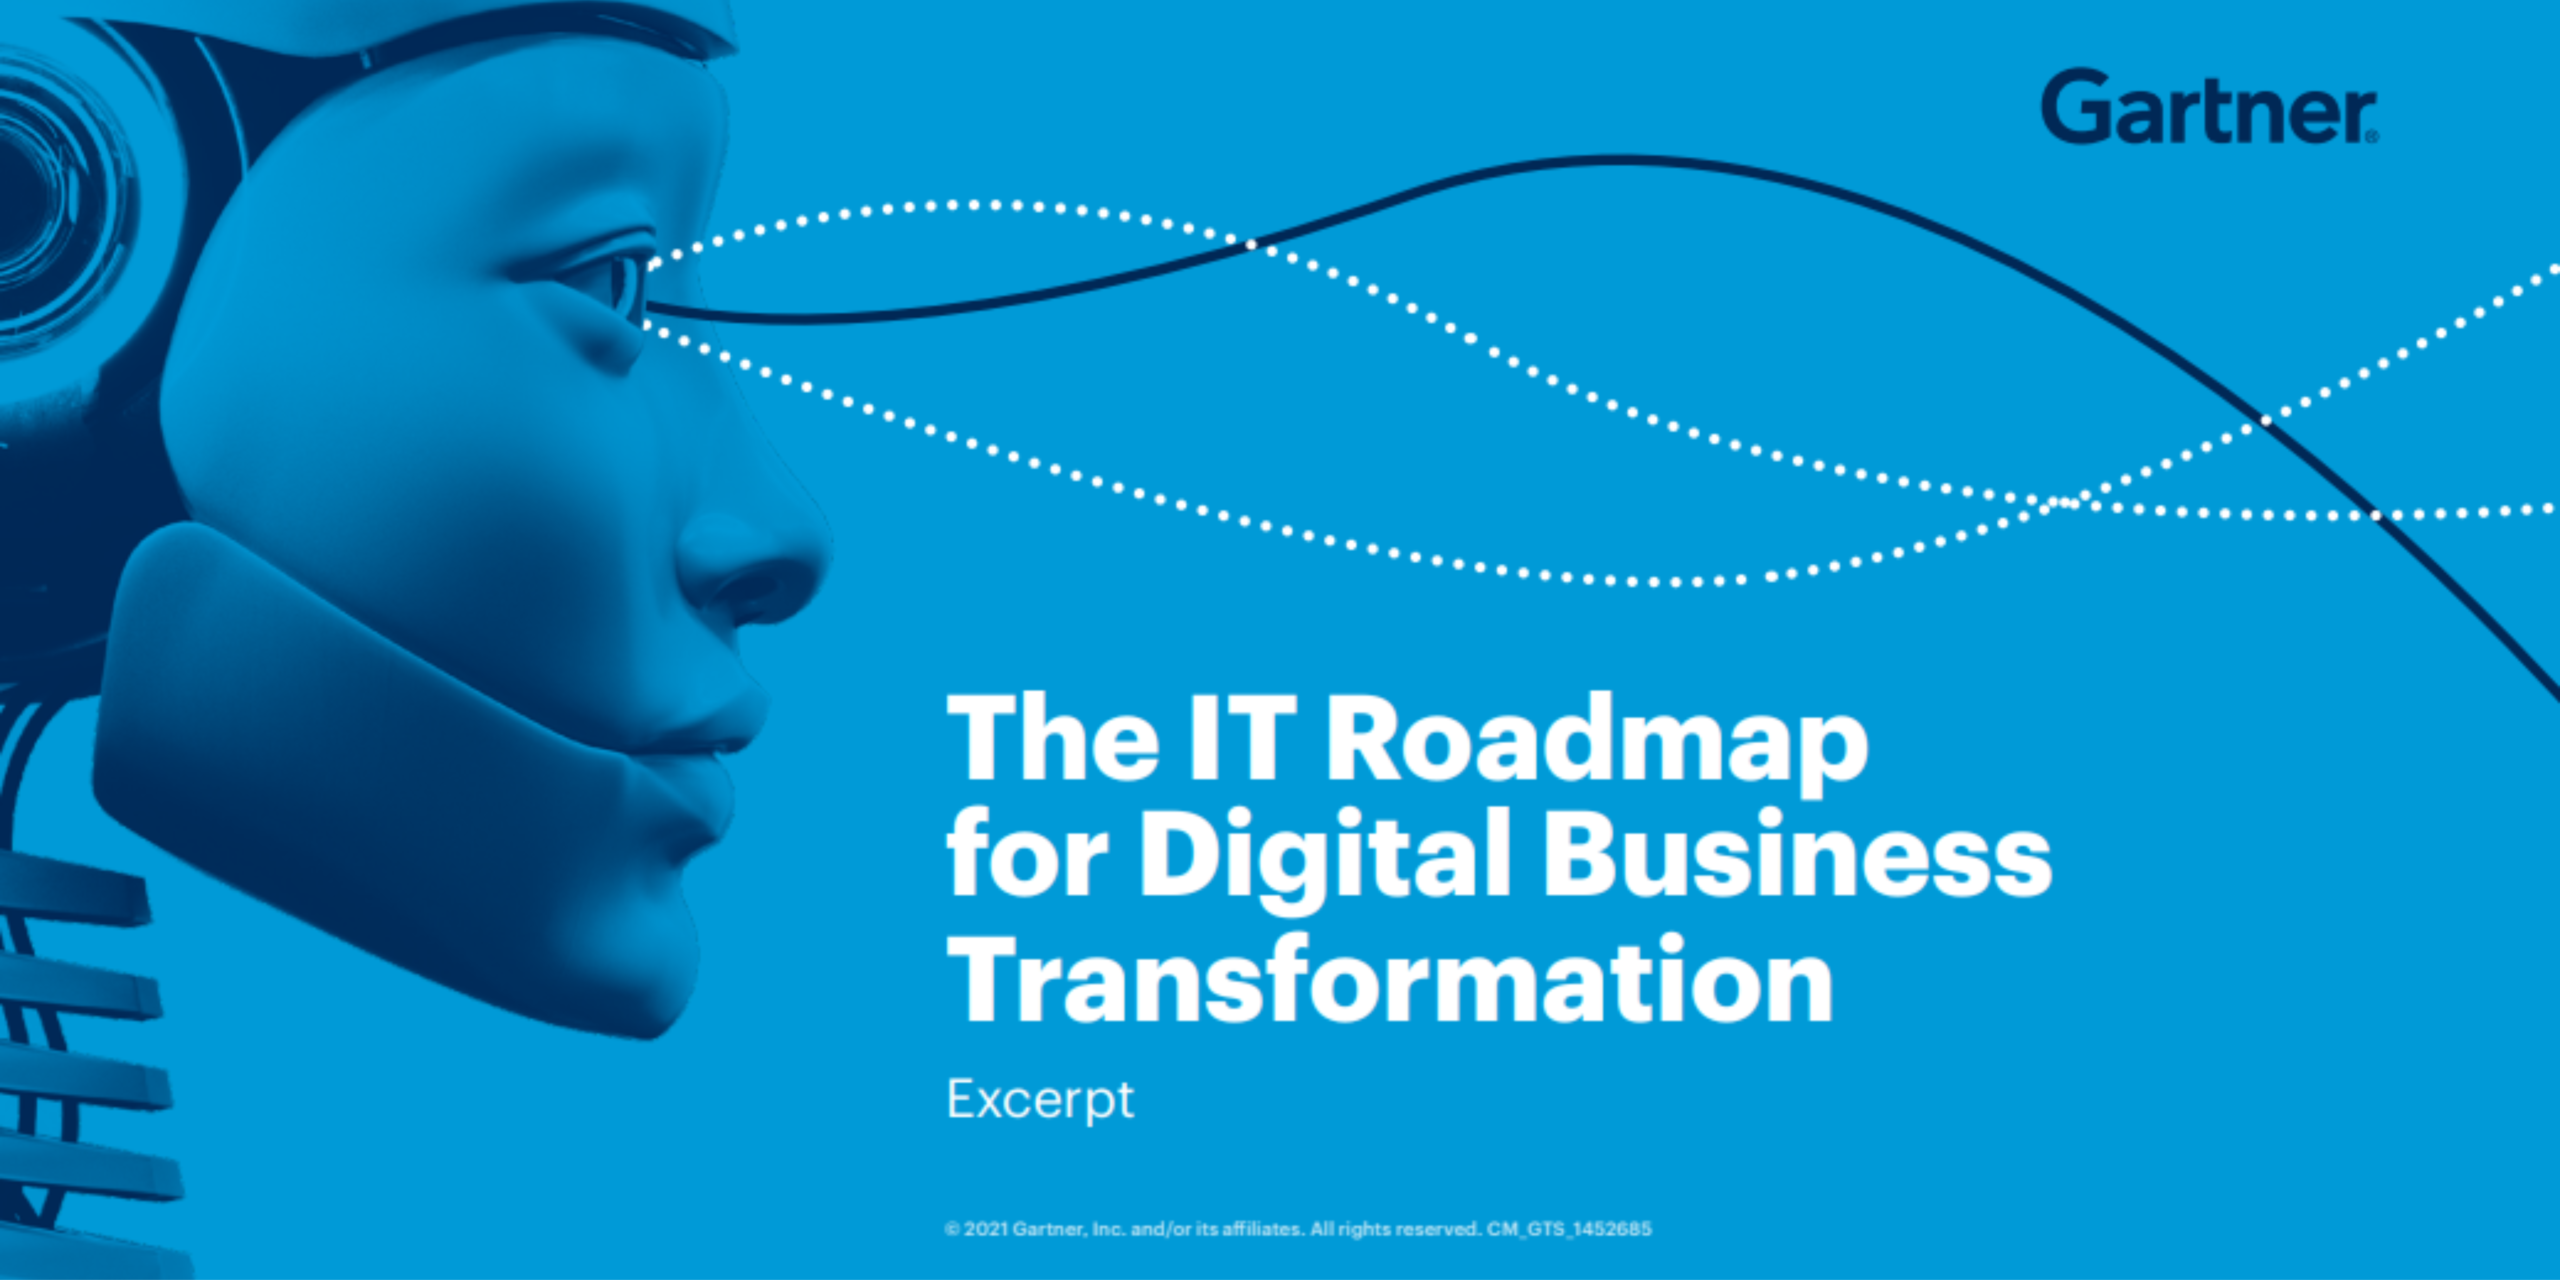 The IT Roadmap for Digital Business Transformation By Gartner